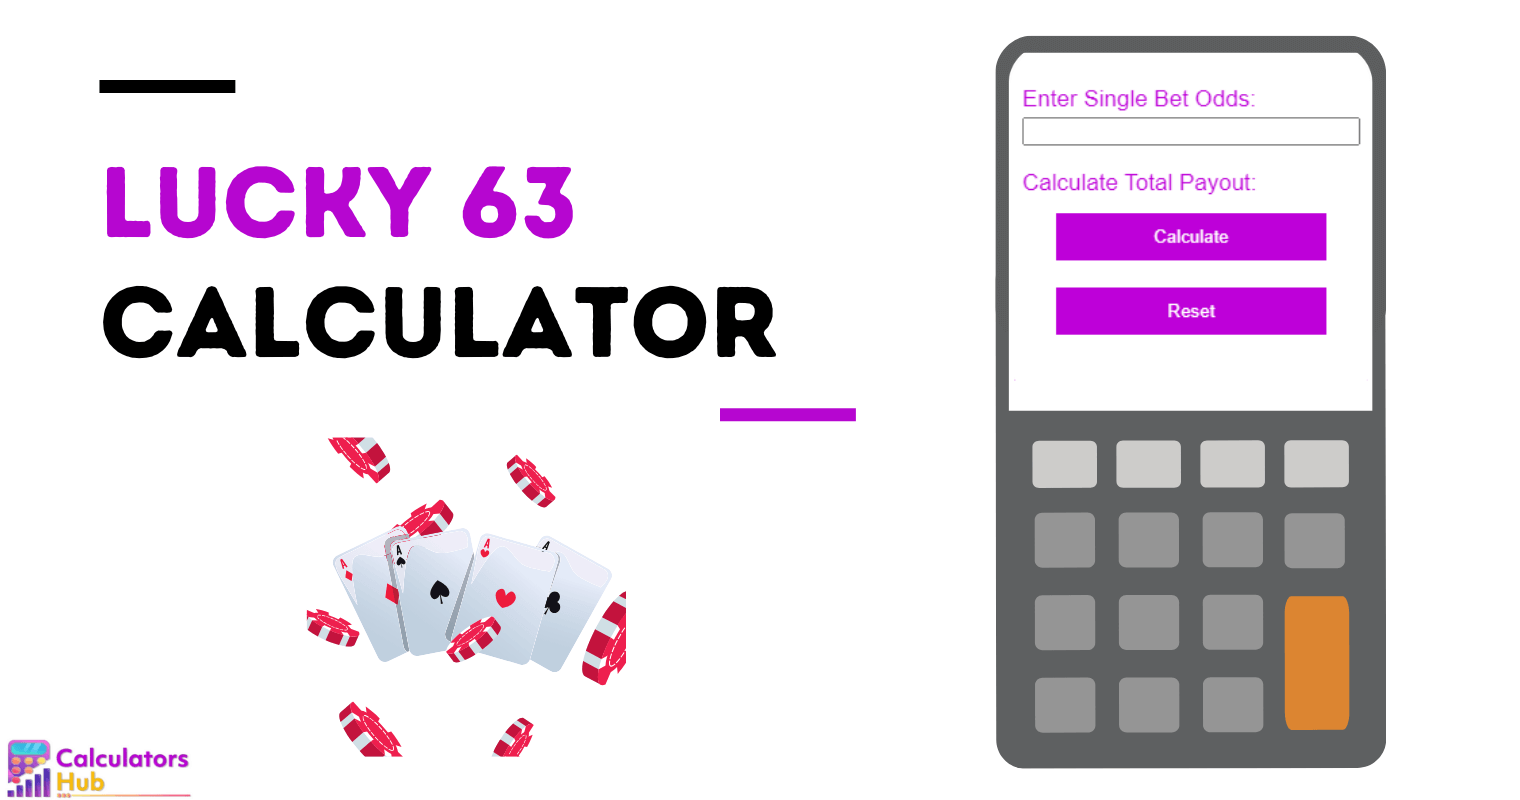 Lucky 63 Calculator